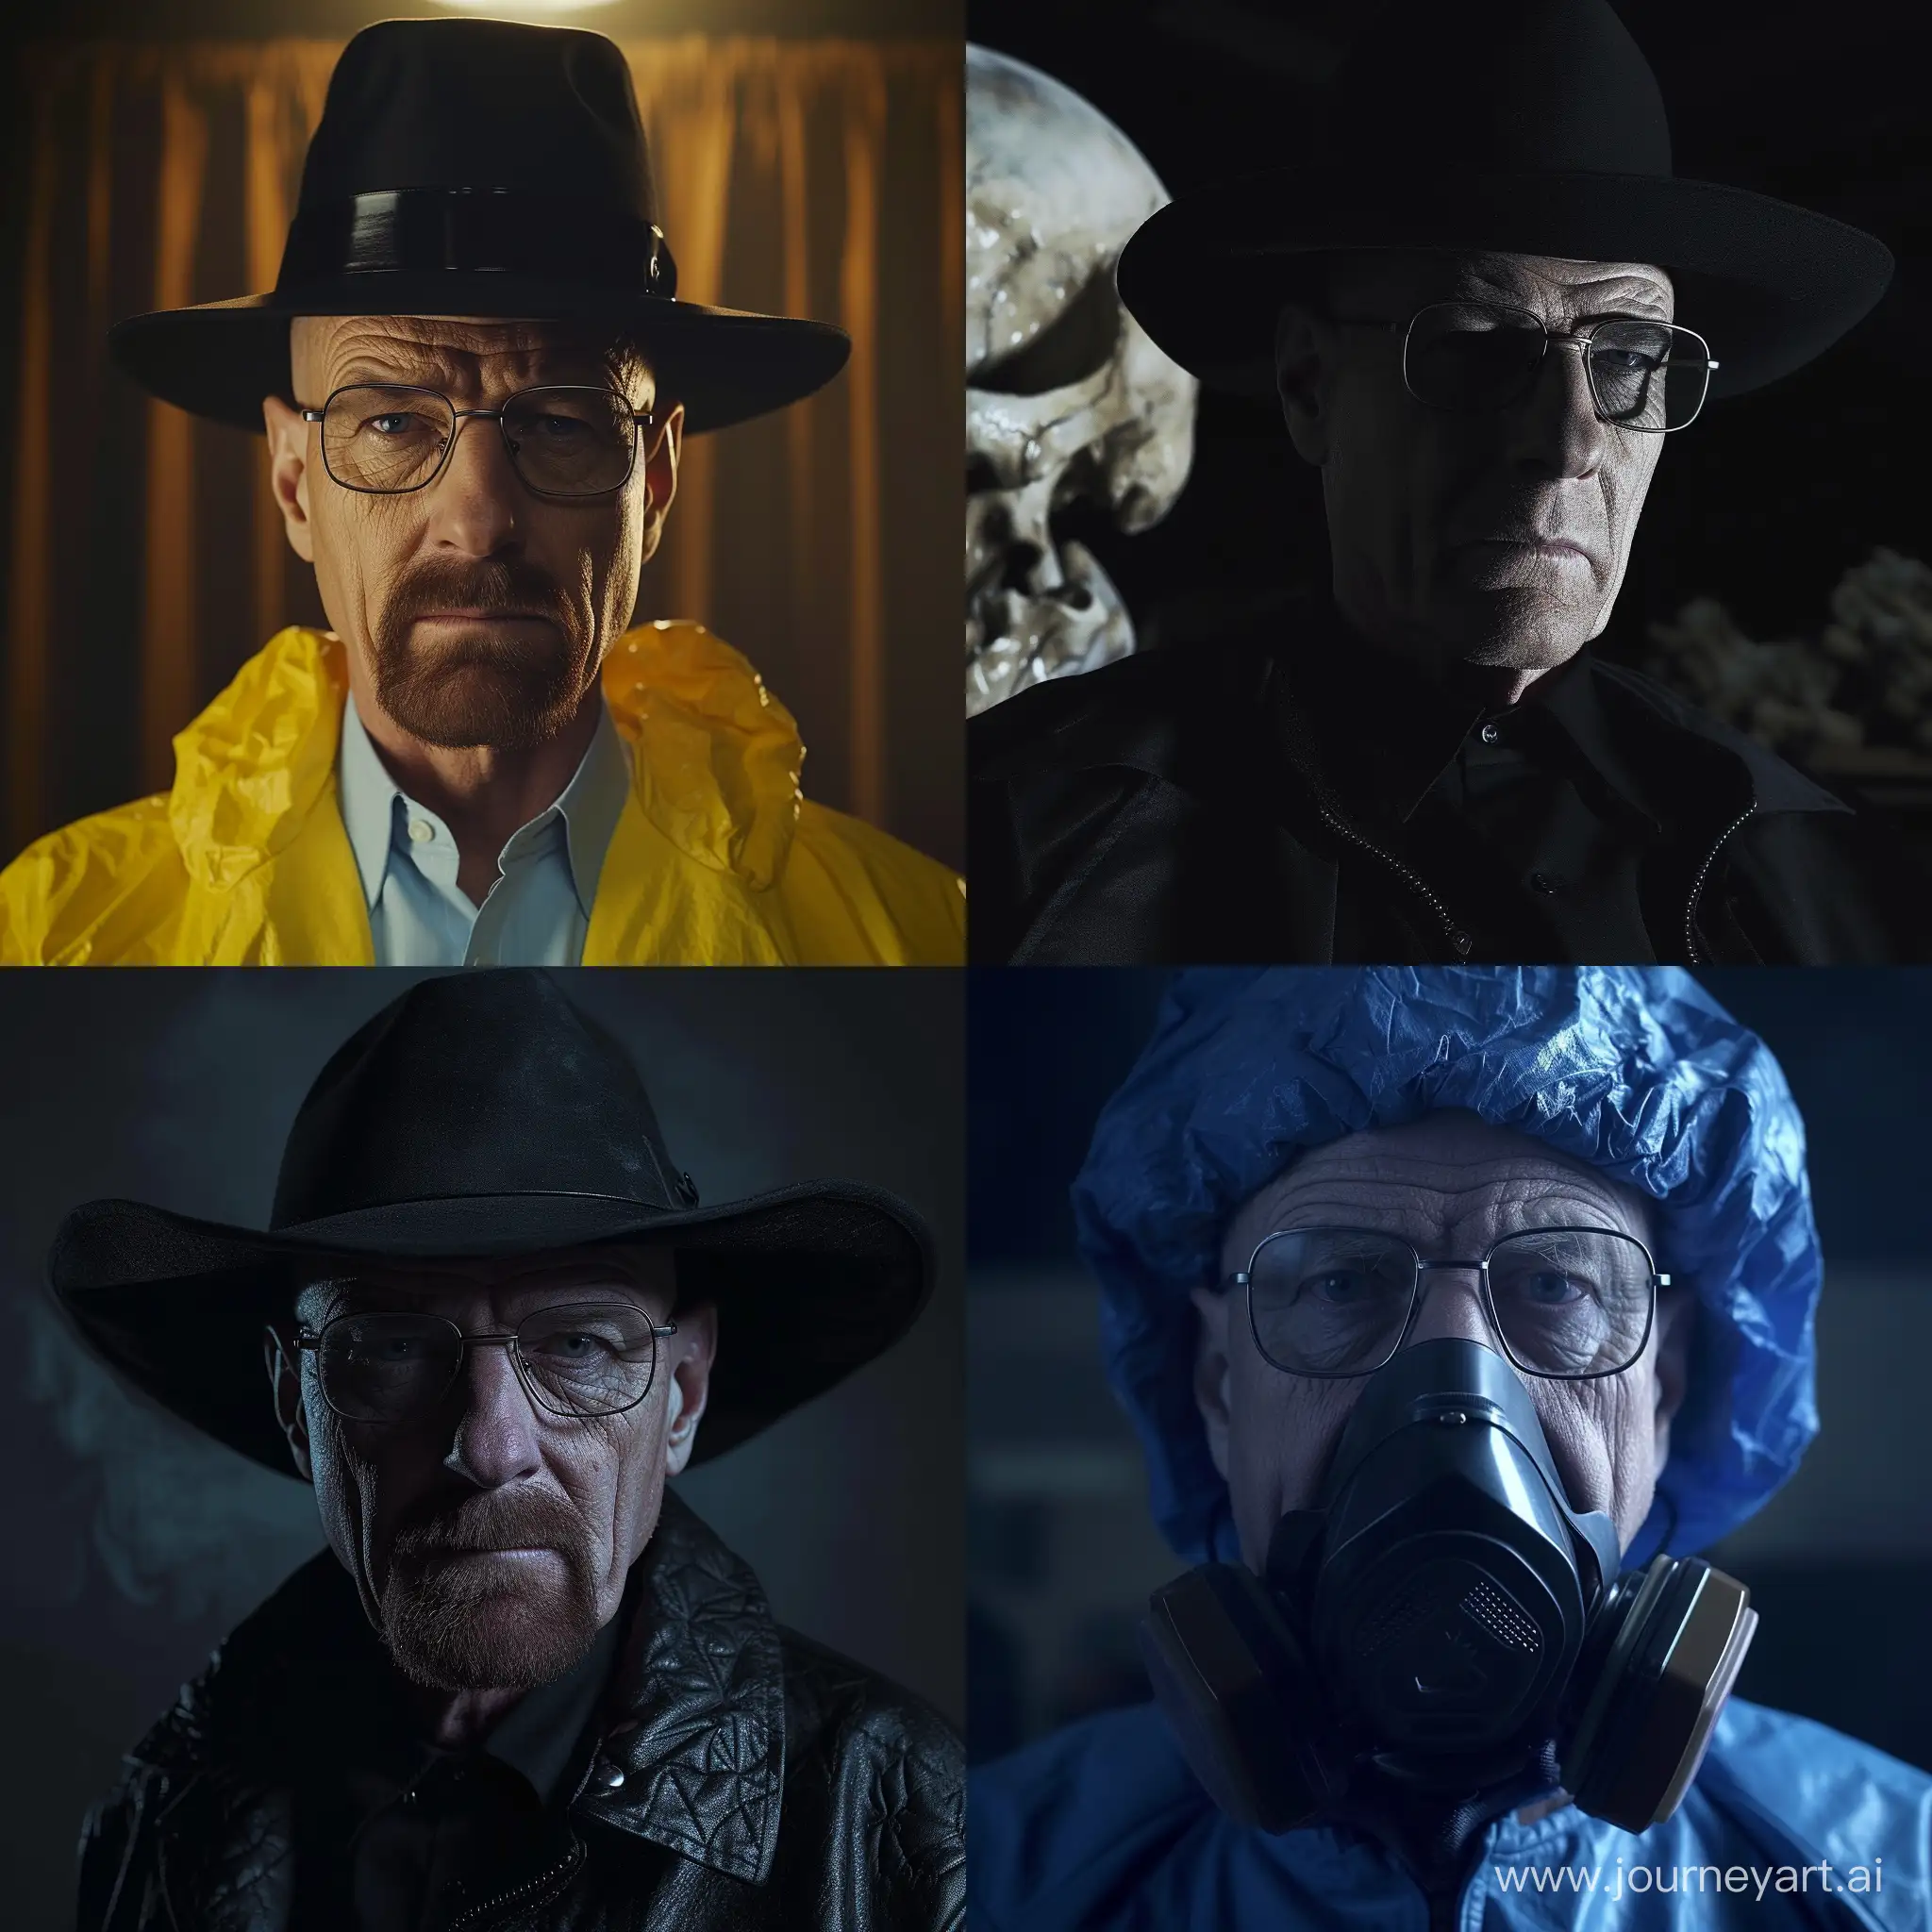 dvd screengrab from breaking bad, Walter white as undertaker, in a undertaker costume, aesthetic